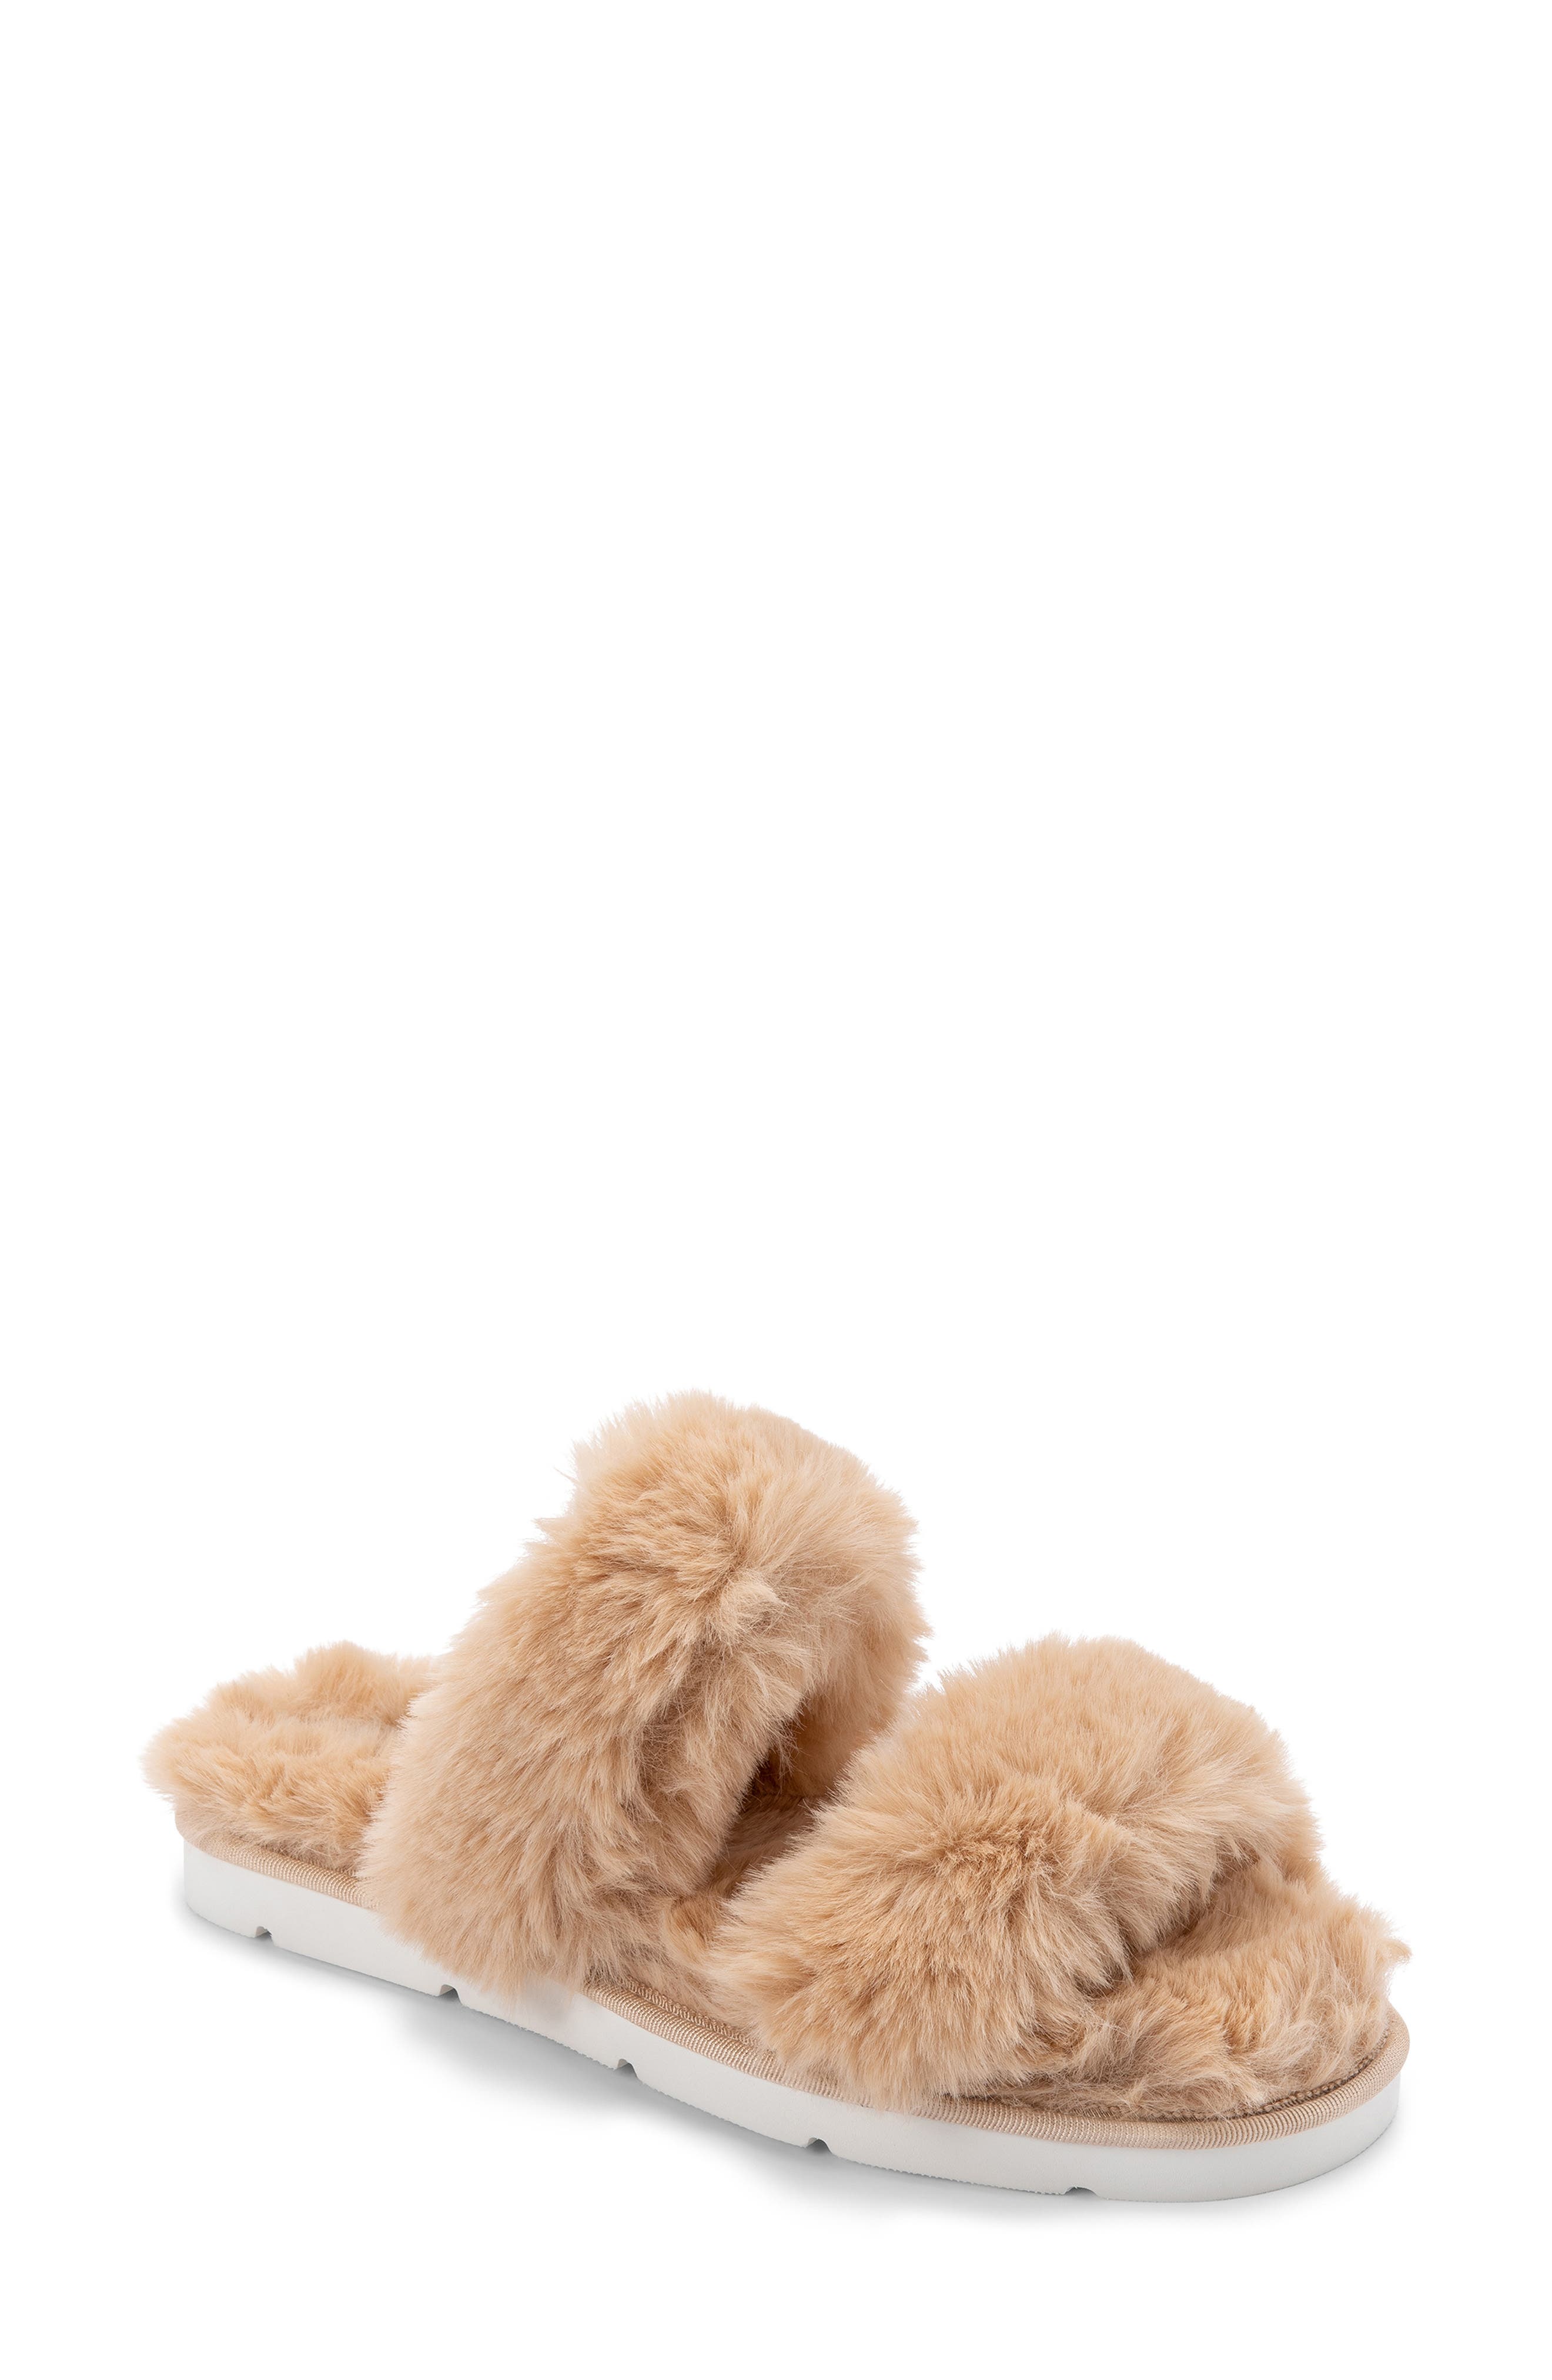 fordom Utænkelig Creep next sale slippers,www.hotelsobrado.com